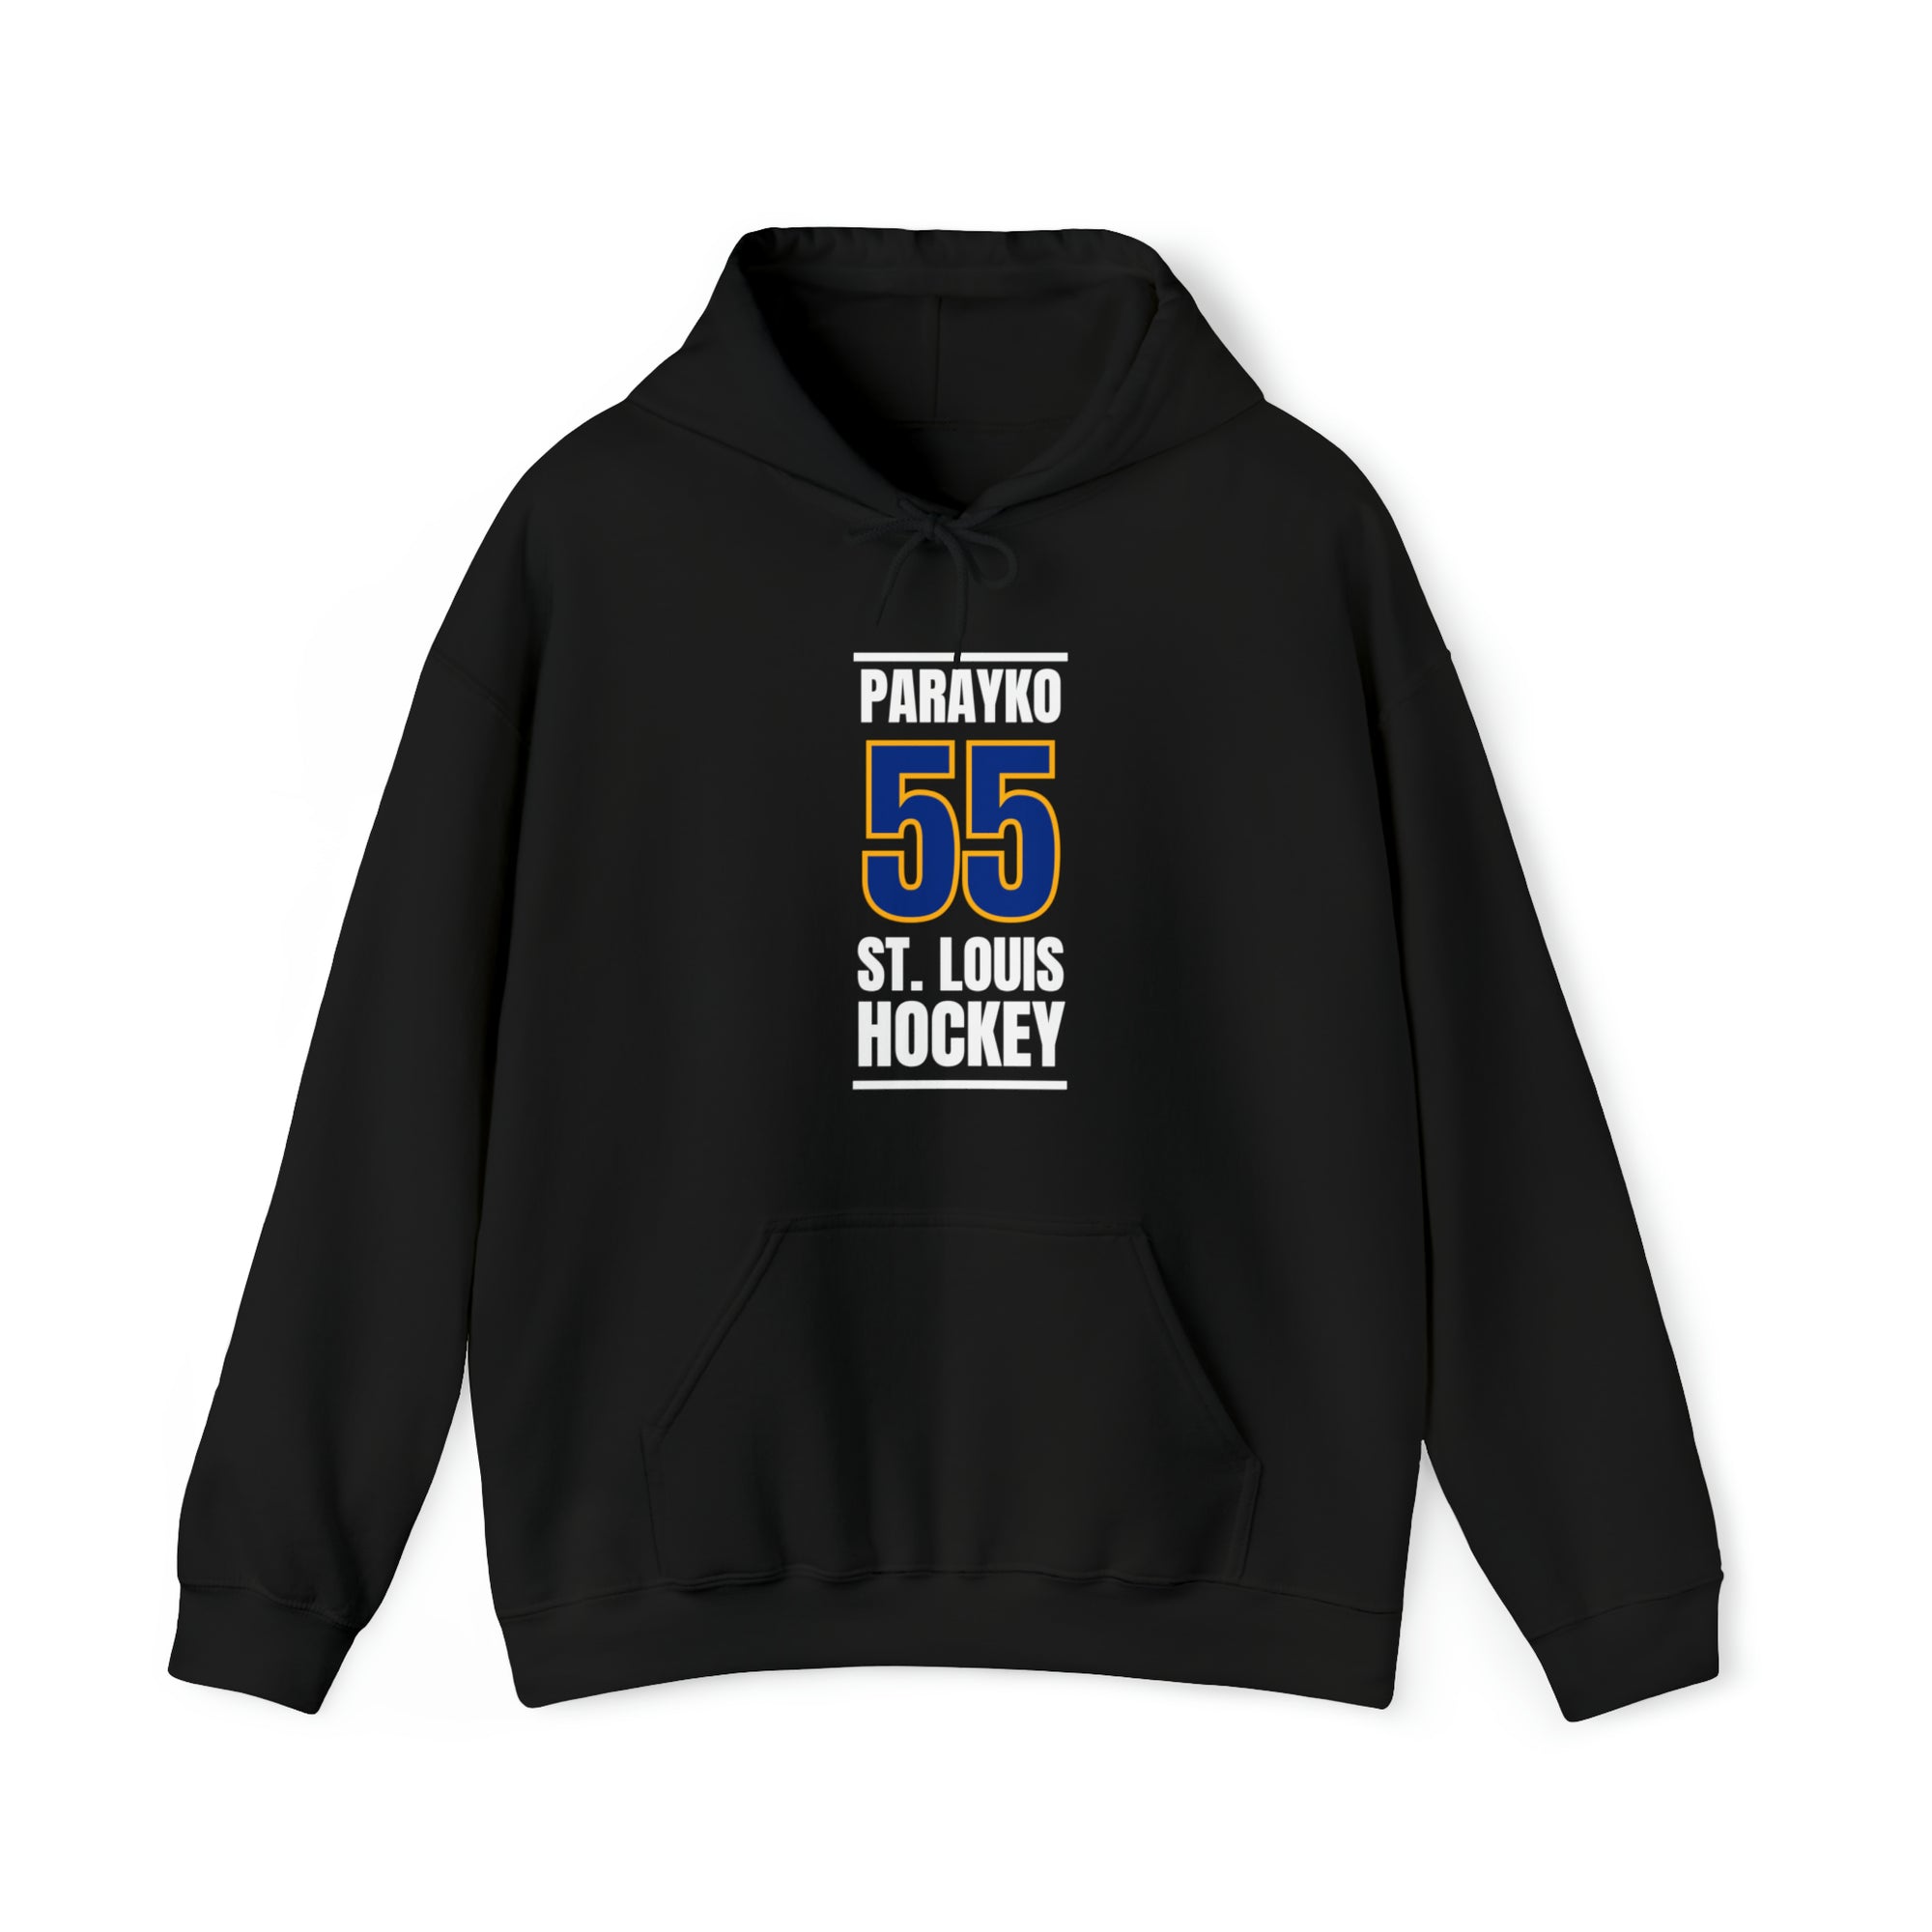 Parayko 55 St. Louis Hockey Blue Vertical Design Unisex Hooded Sweatshirt